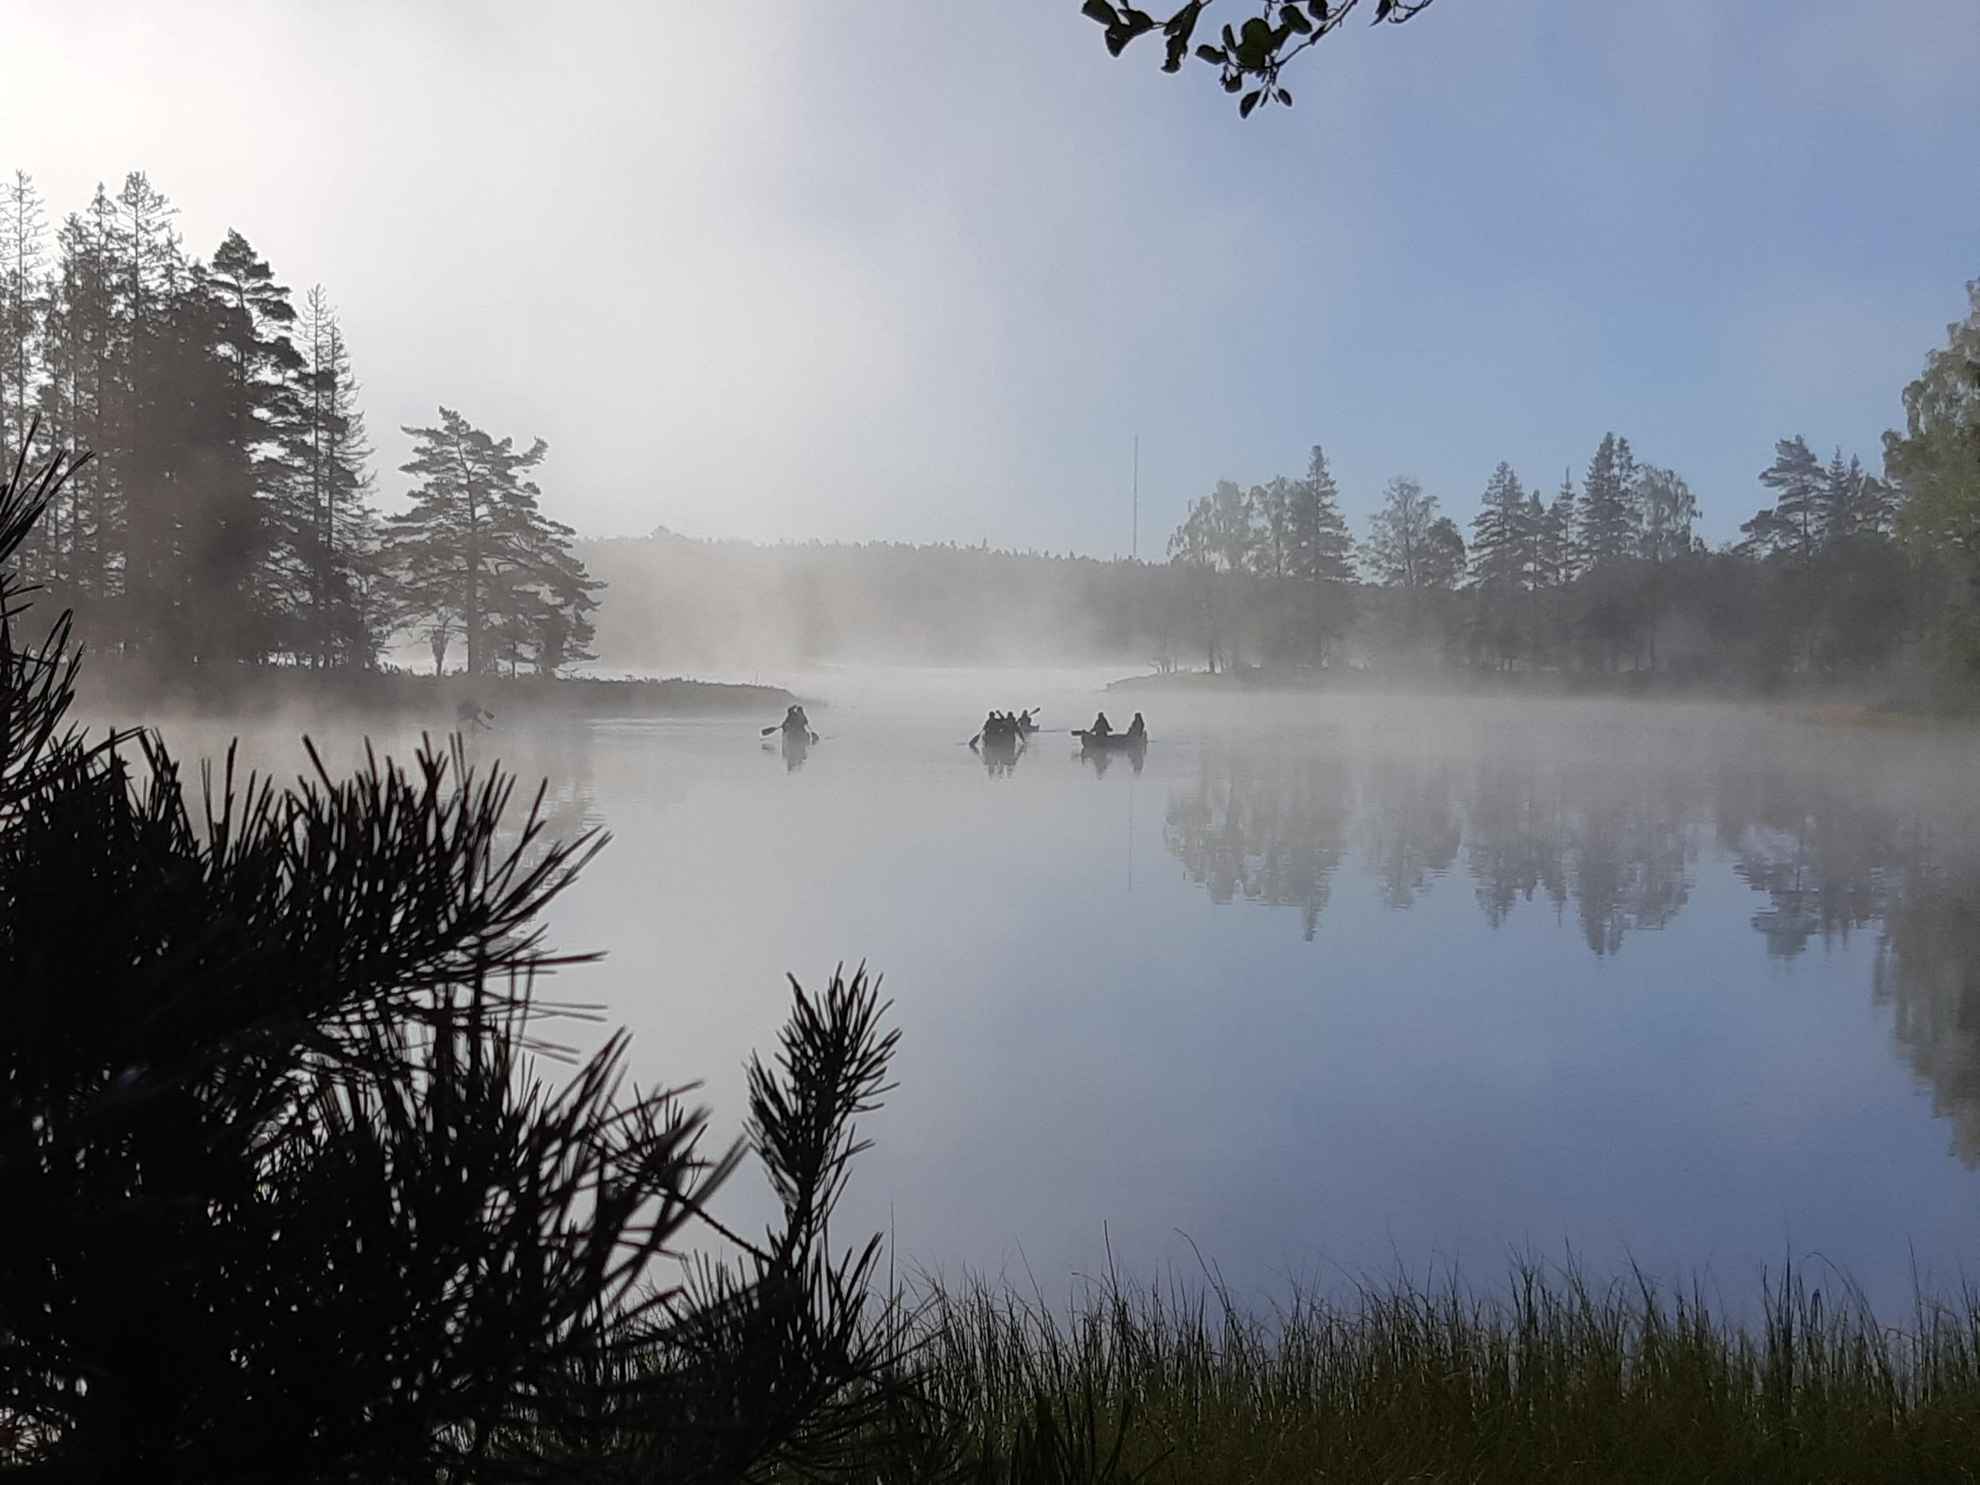 Canoeing on a foggy lake